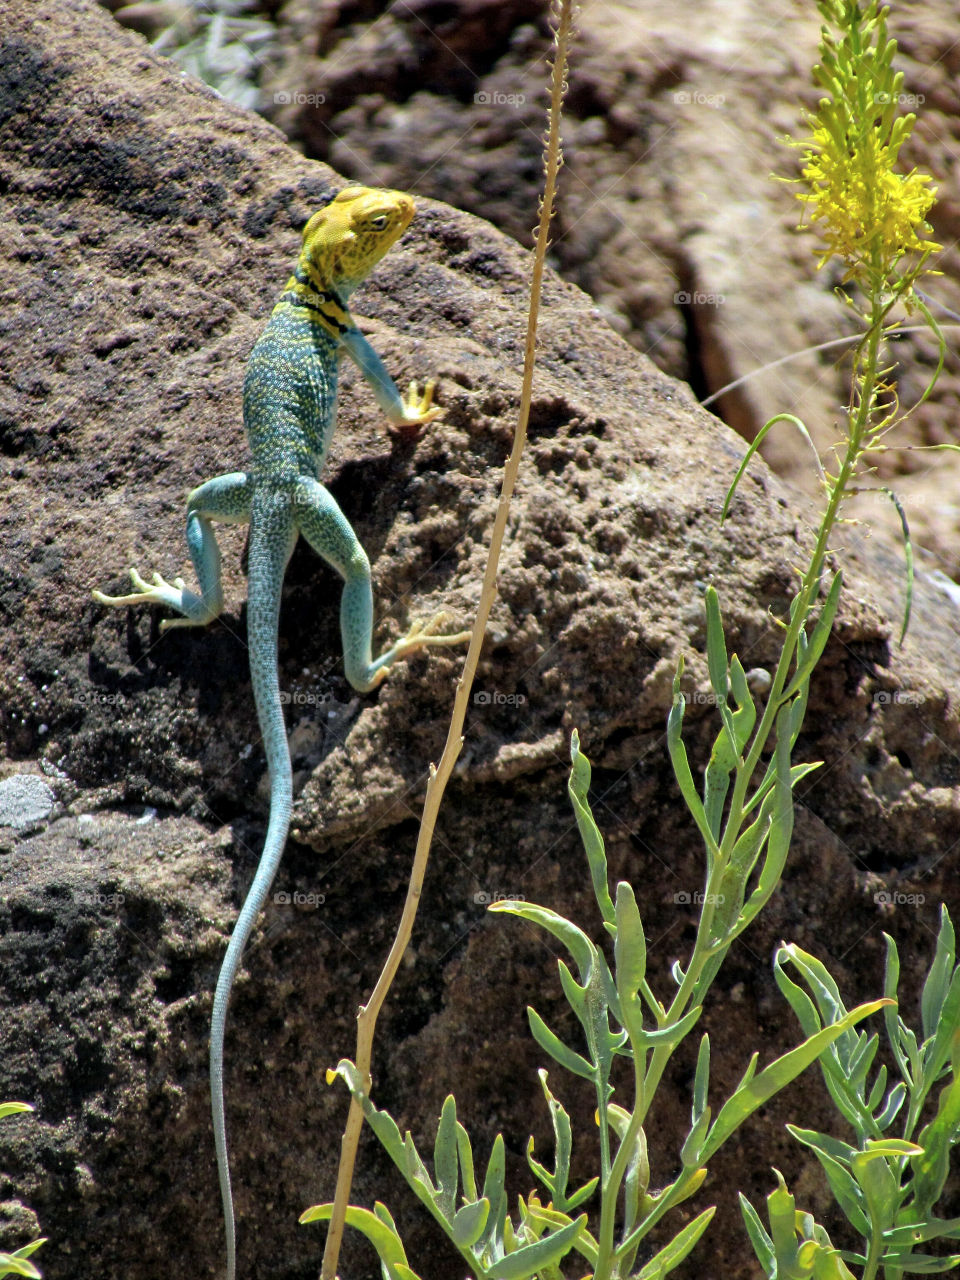 Lizard sunning in the desert